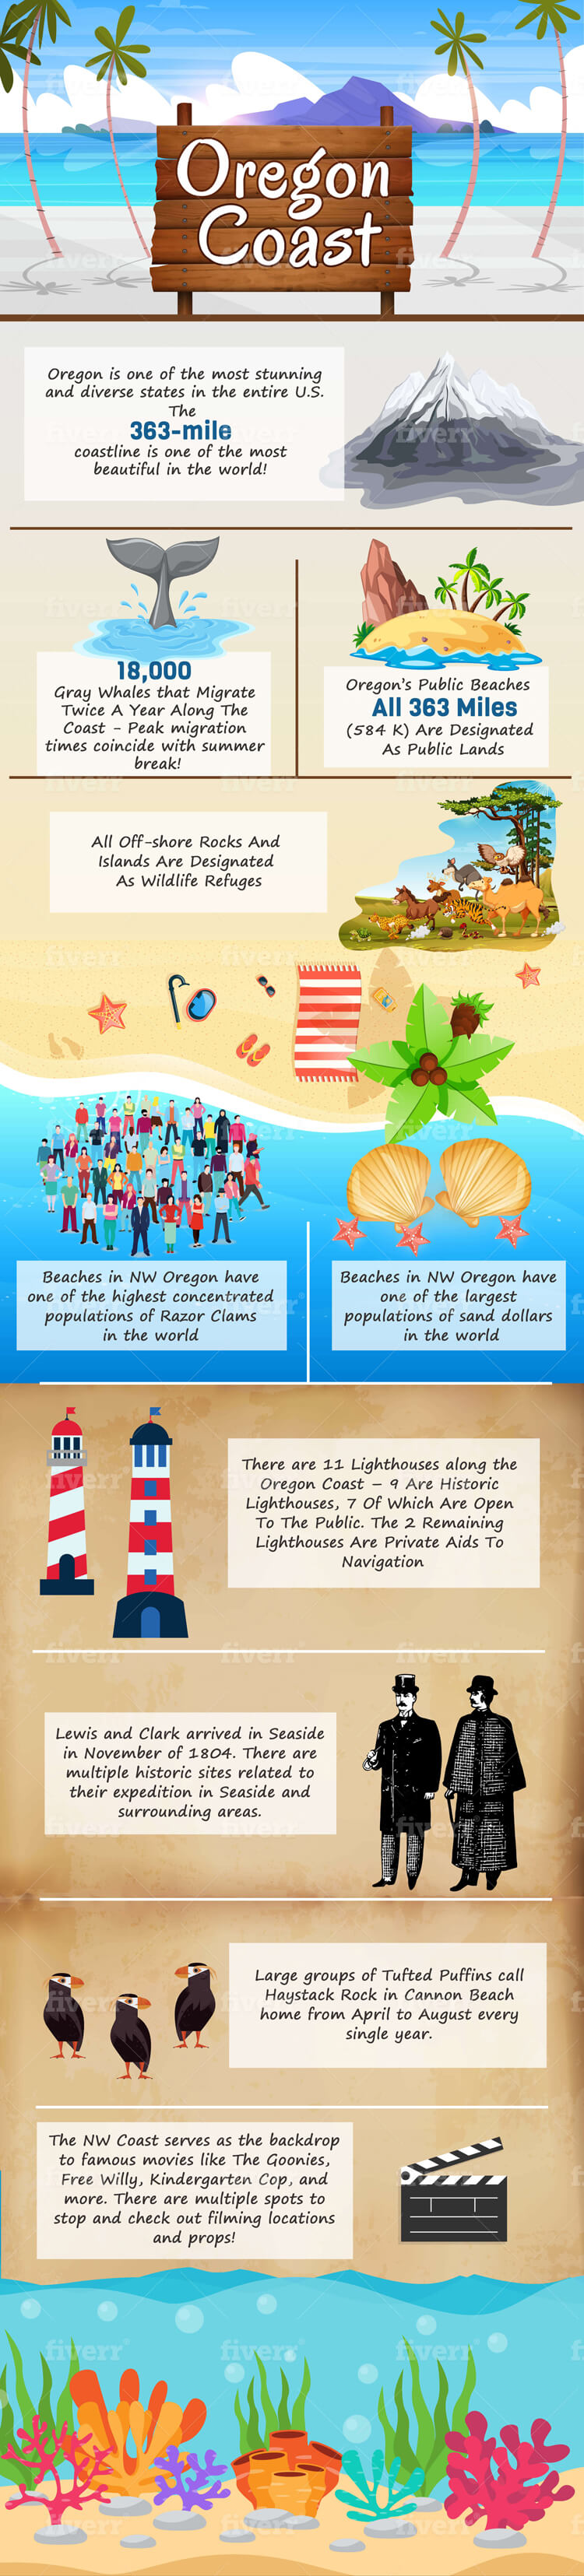 Oregon Coast Vacation Rentals